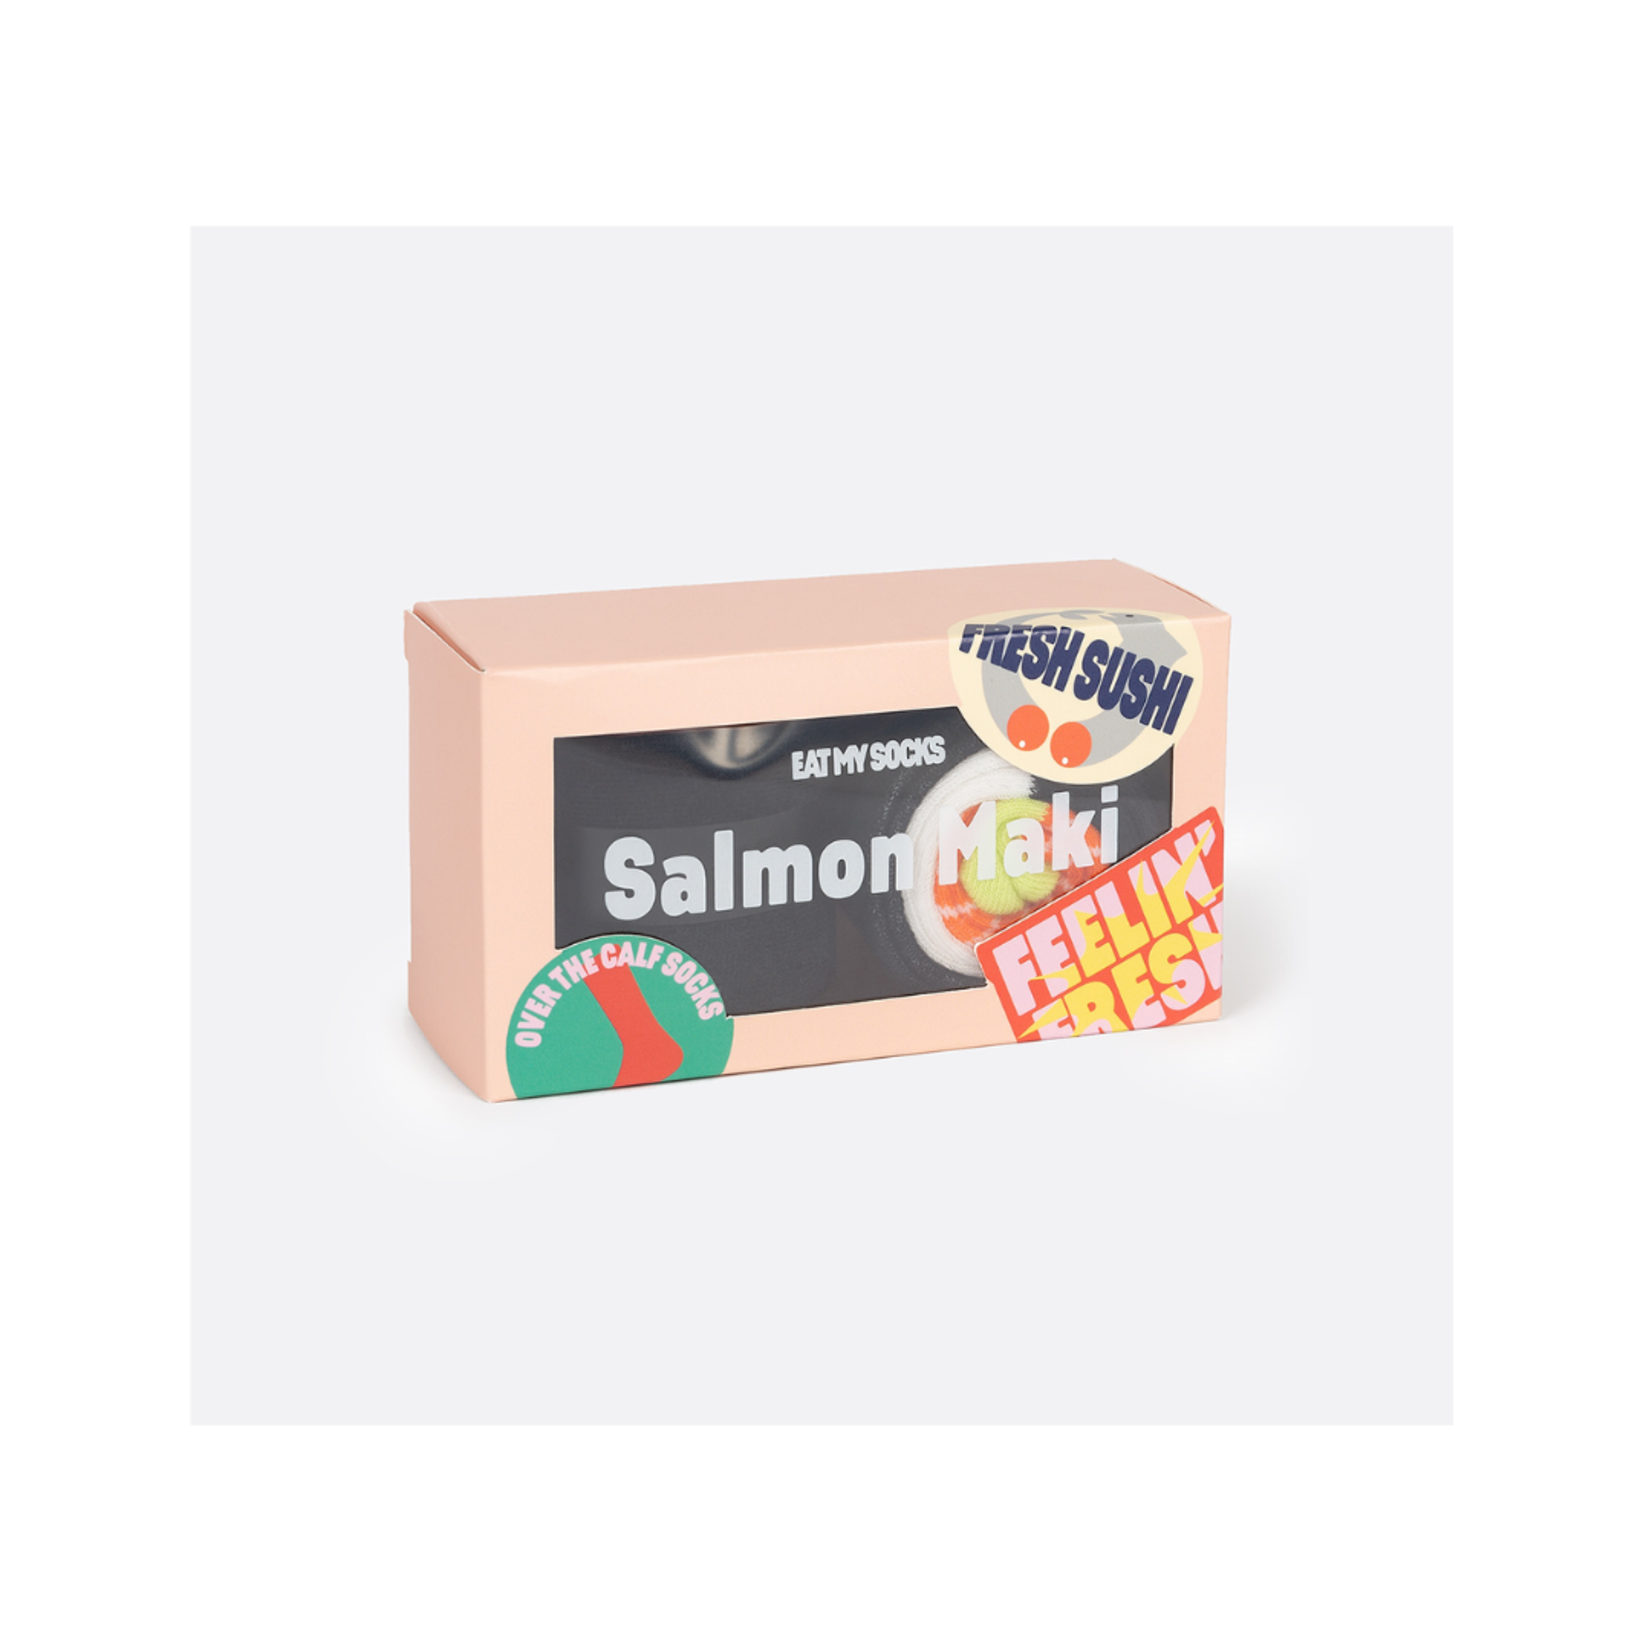 Eat My Socks - Salmon Maki